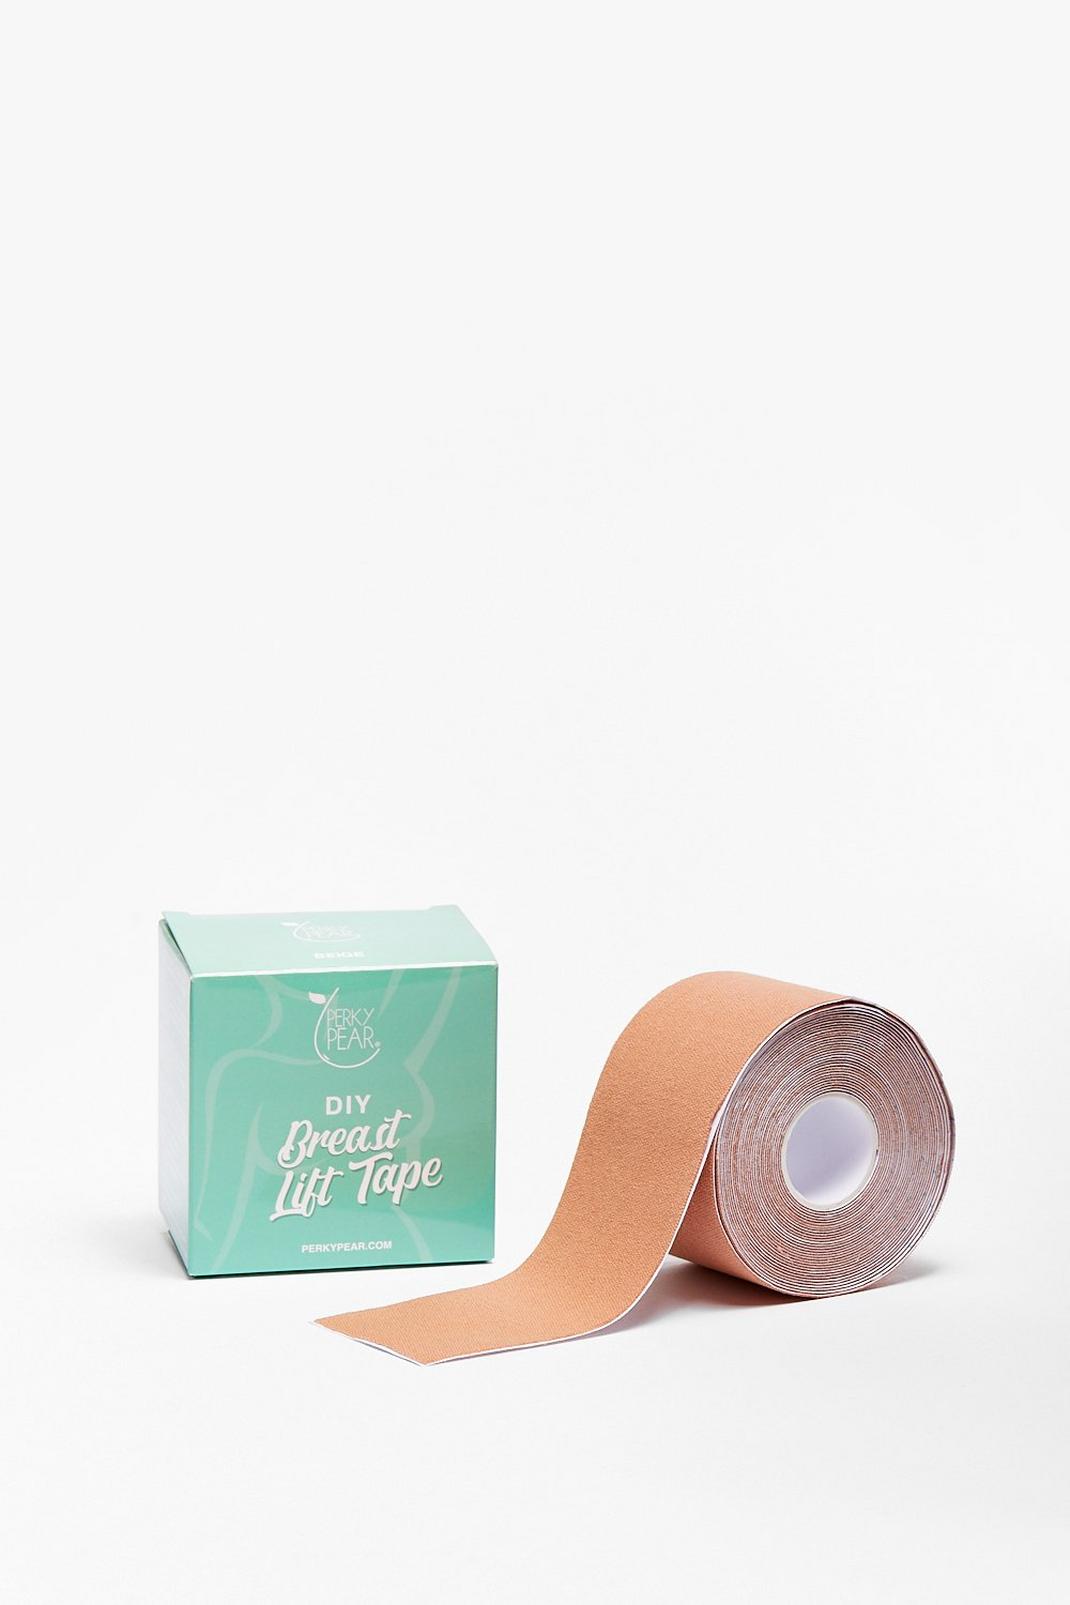 Perky Pear DIY Breast Lift Tape image number 1